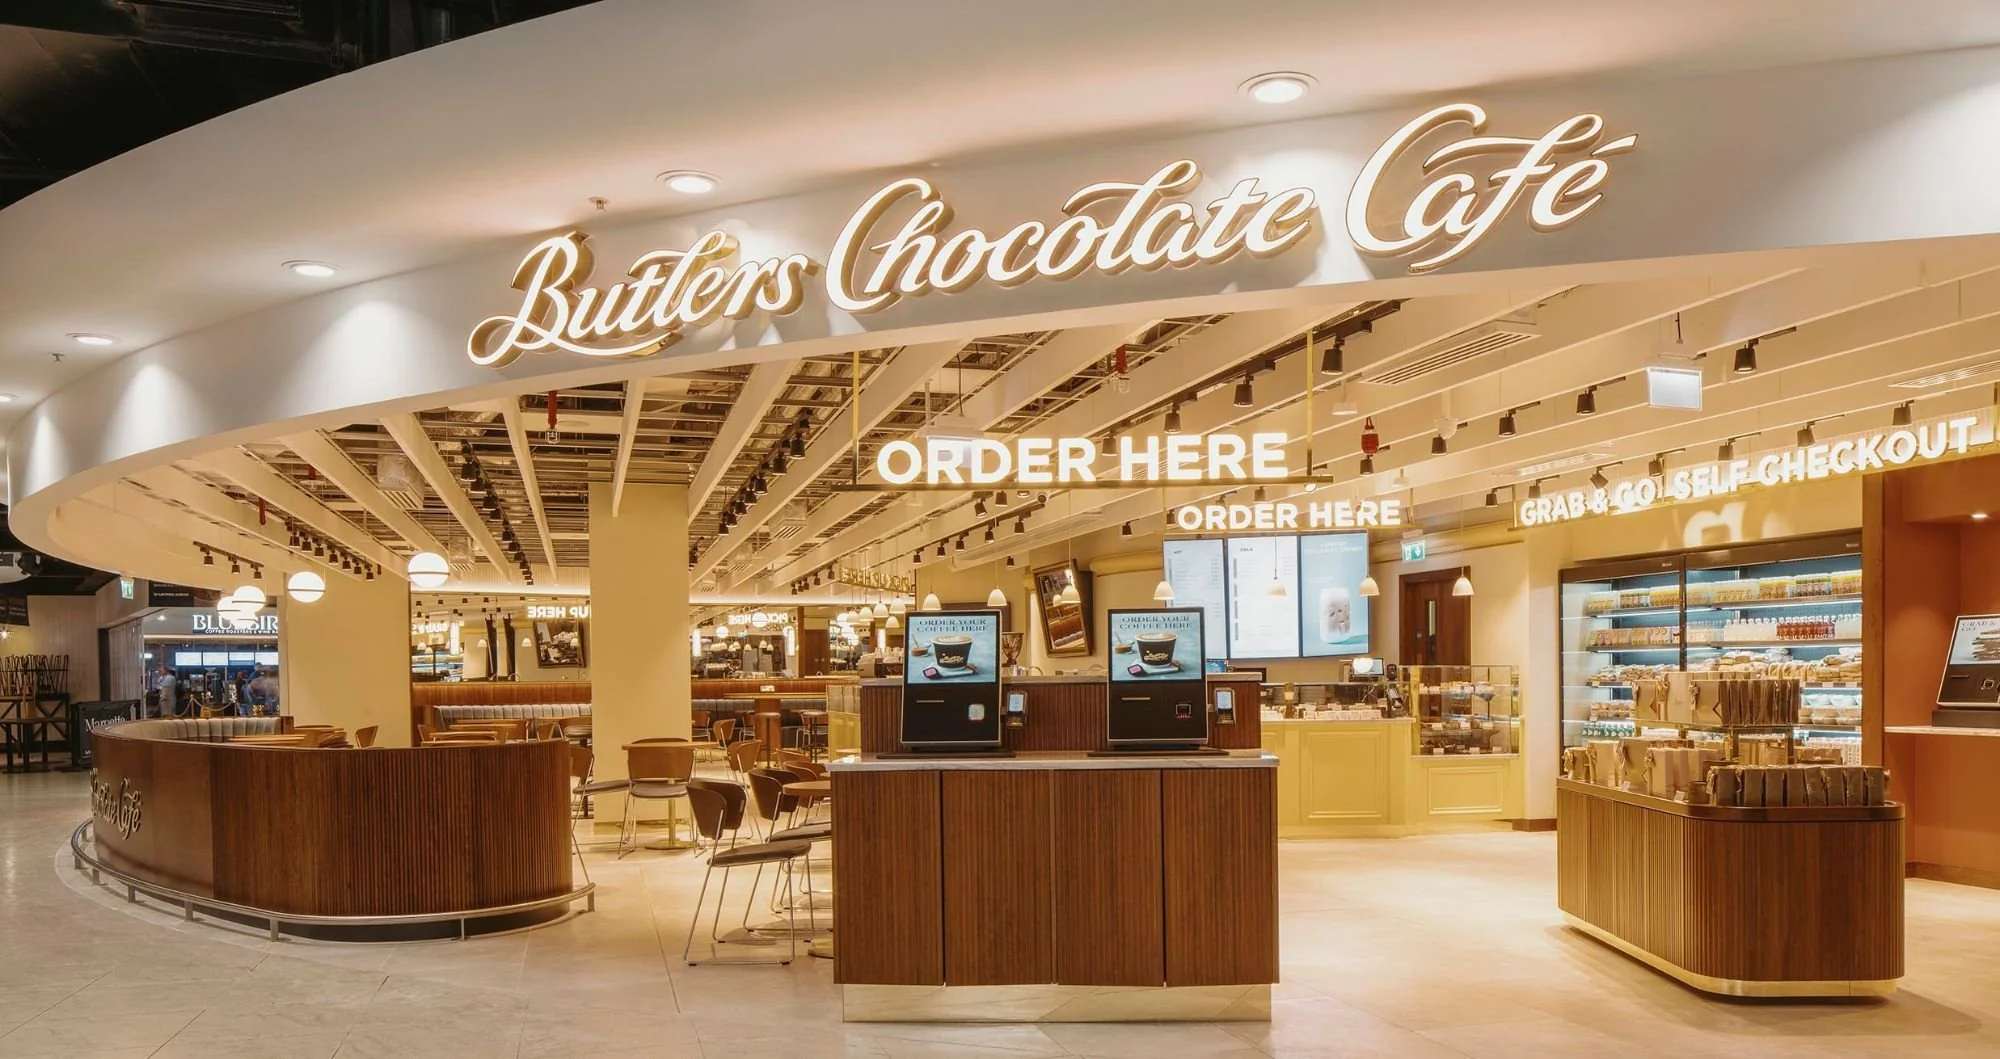 Butlers Chocolate Café, T1 Dublin Airport